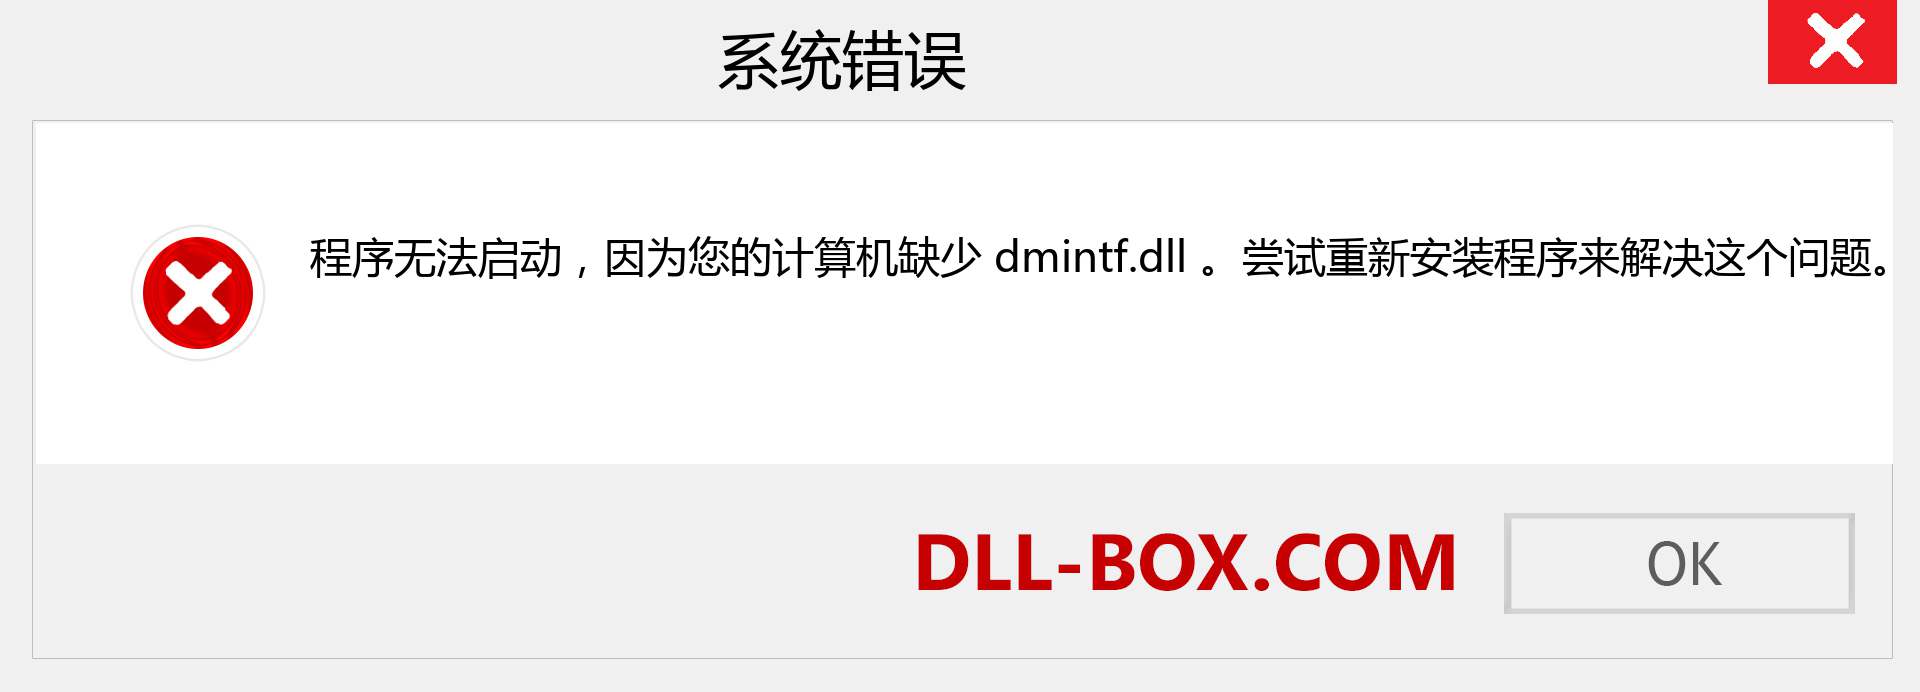 dmintf.dll 文件丢失？。 适用于 Windows 7、8、10 的下载 - 修复 Windows、照片、图像上的 dmintf dll 丢失错误